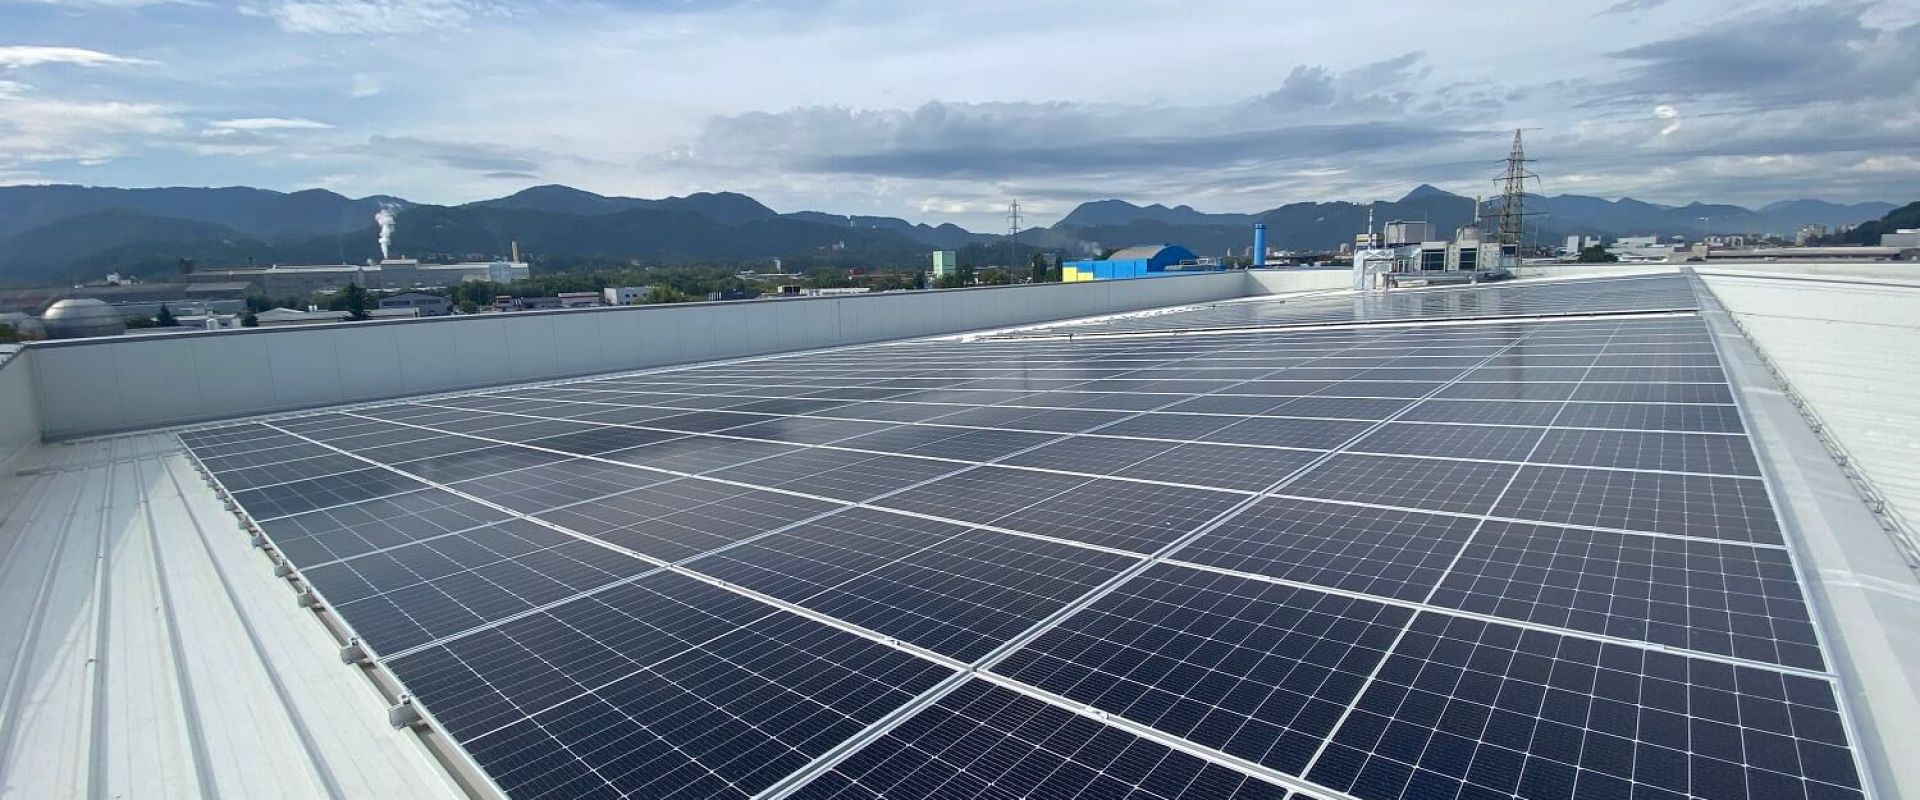 V Hermiju namestili 150 kilovatno sončno elektrarno na streho novega proizvodnega objekta